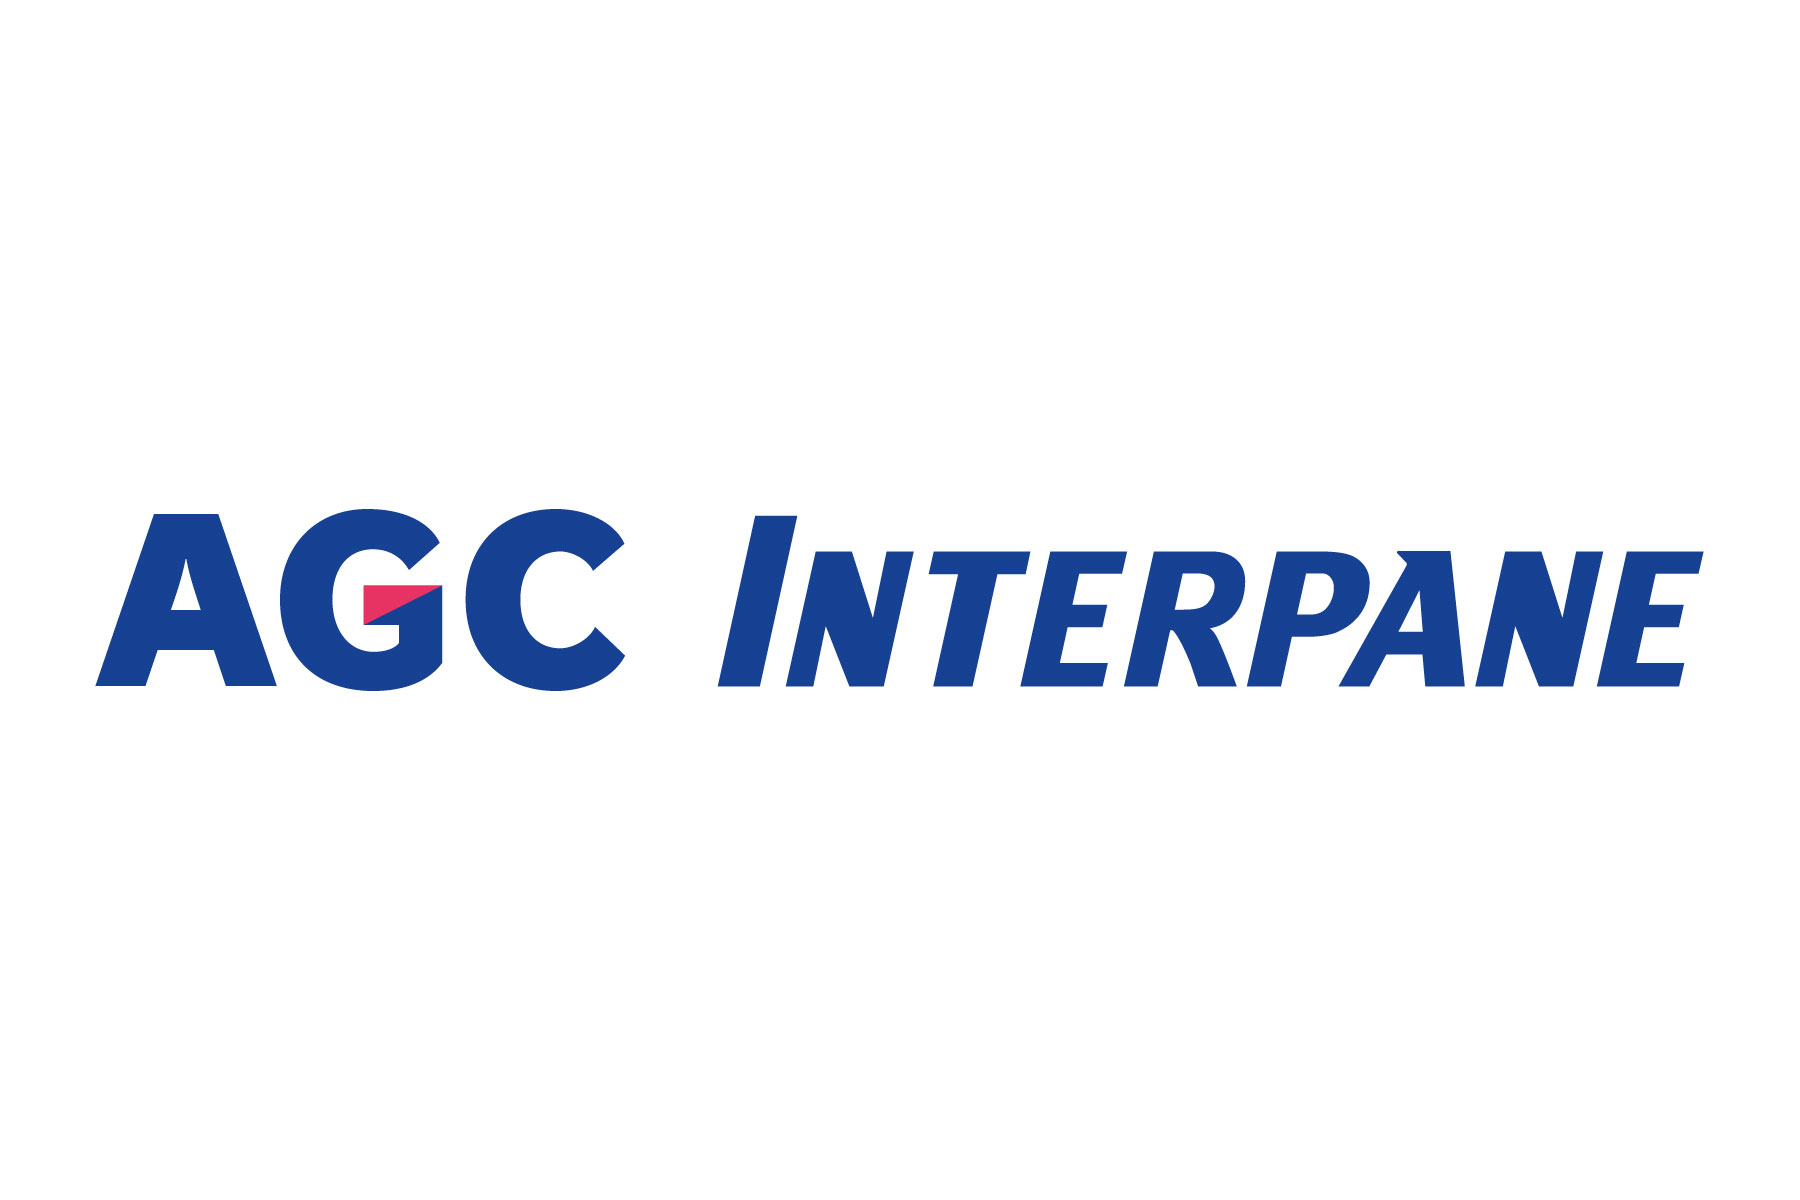 Logo Interpane